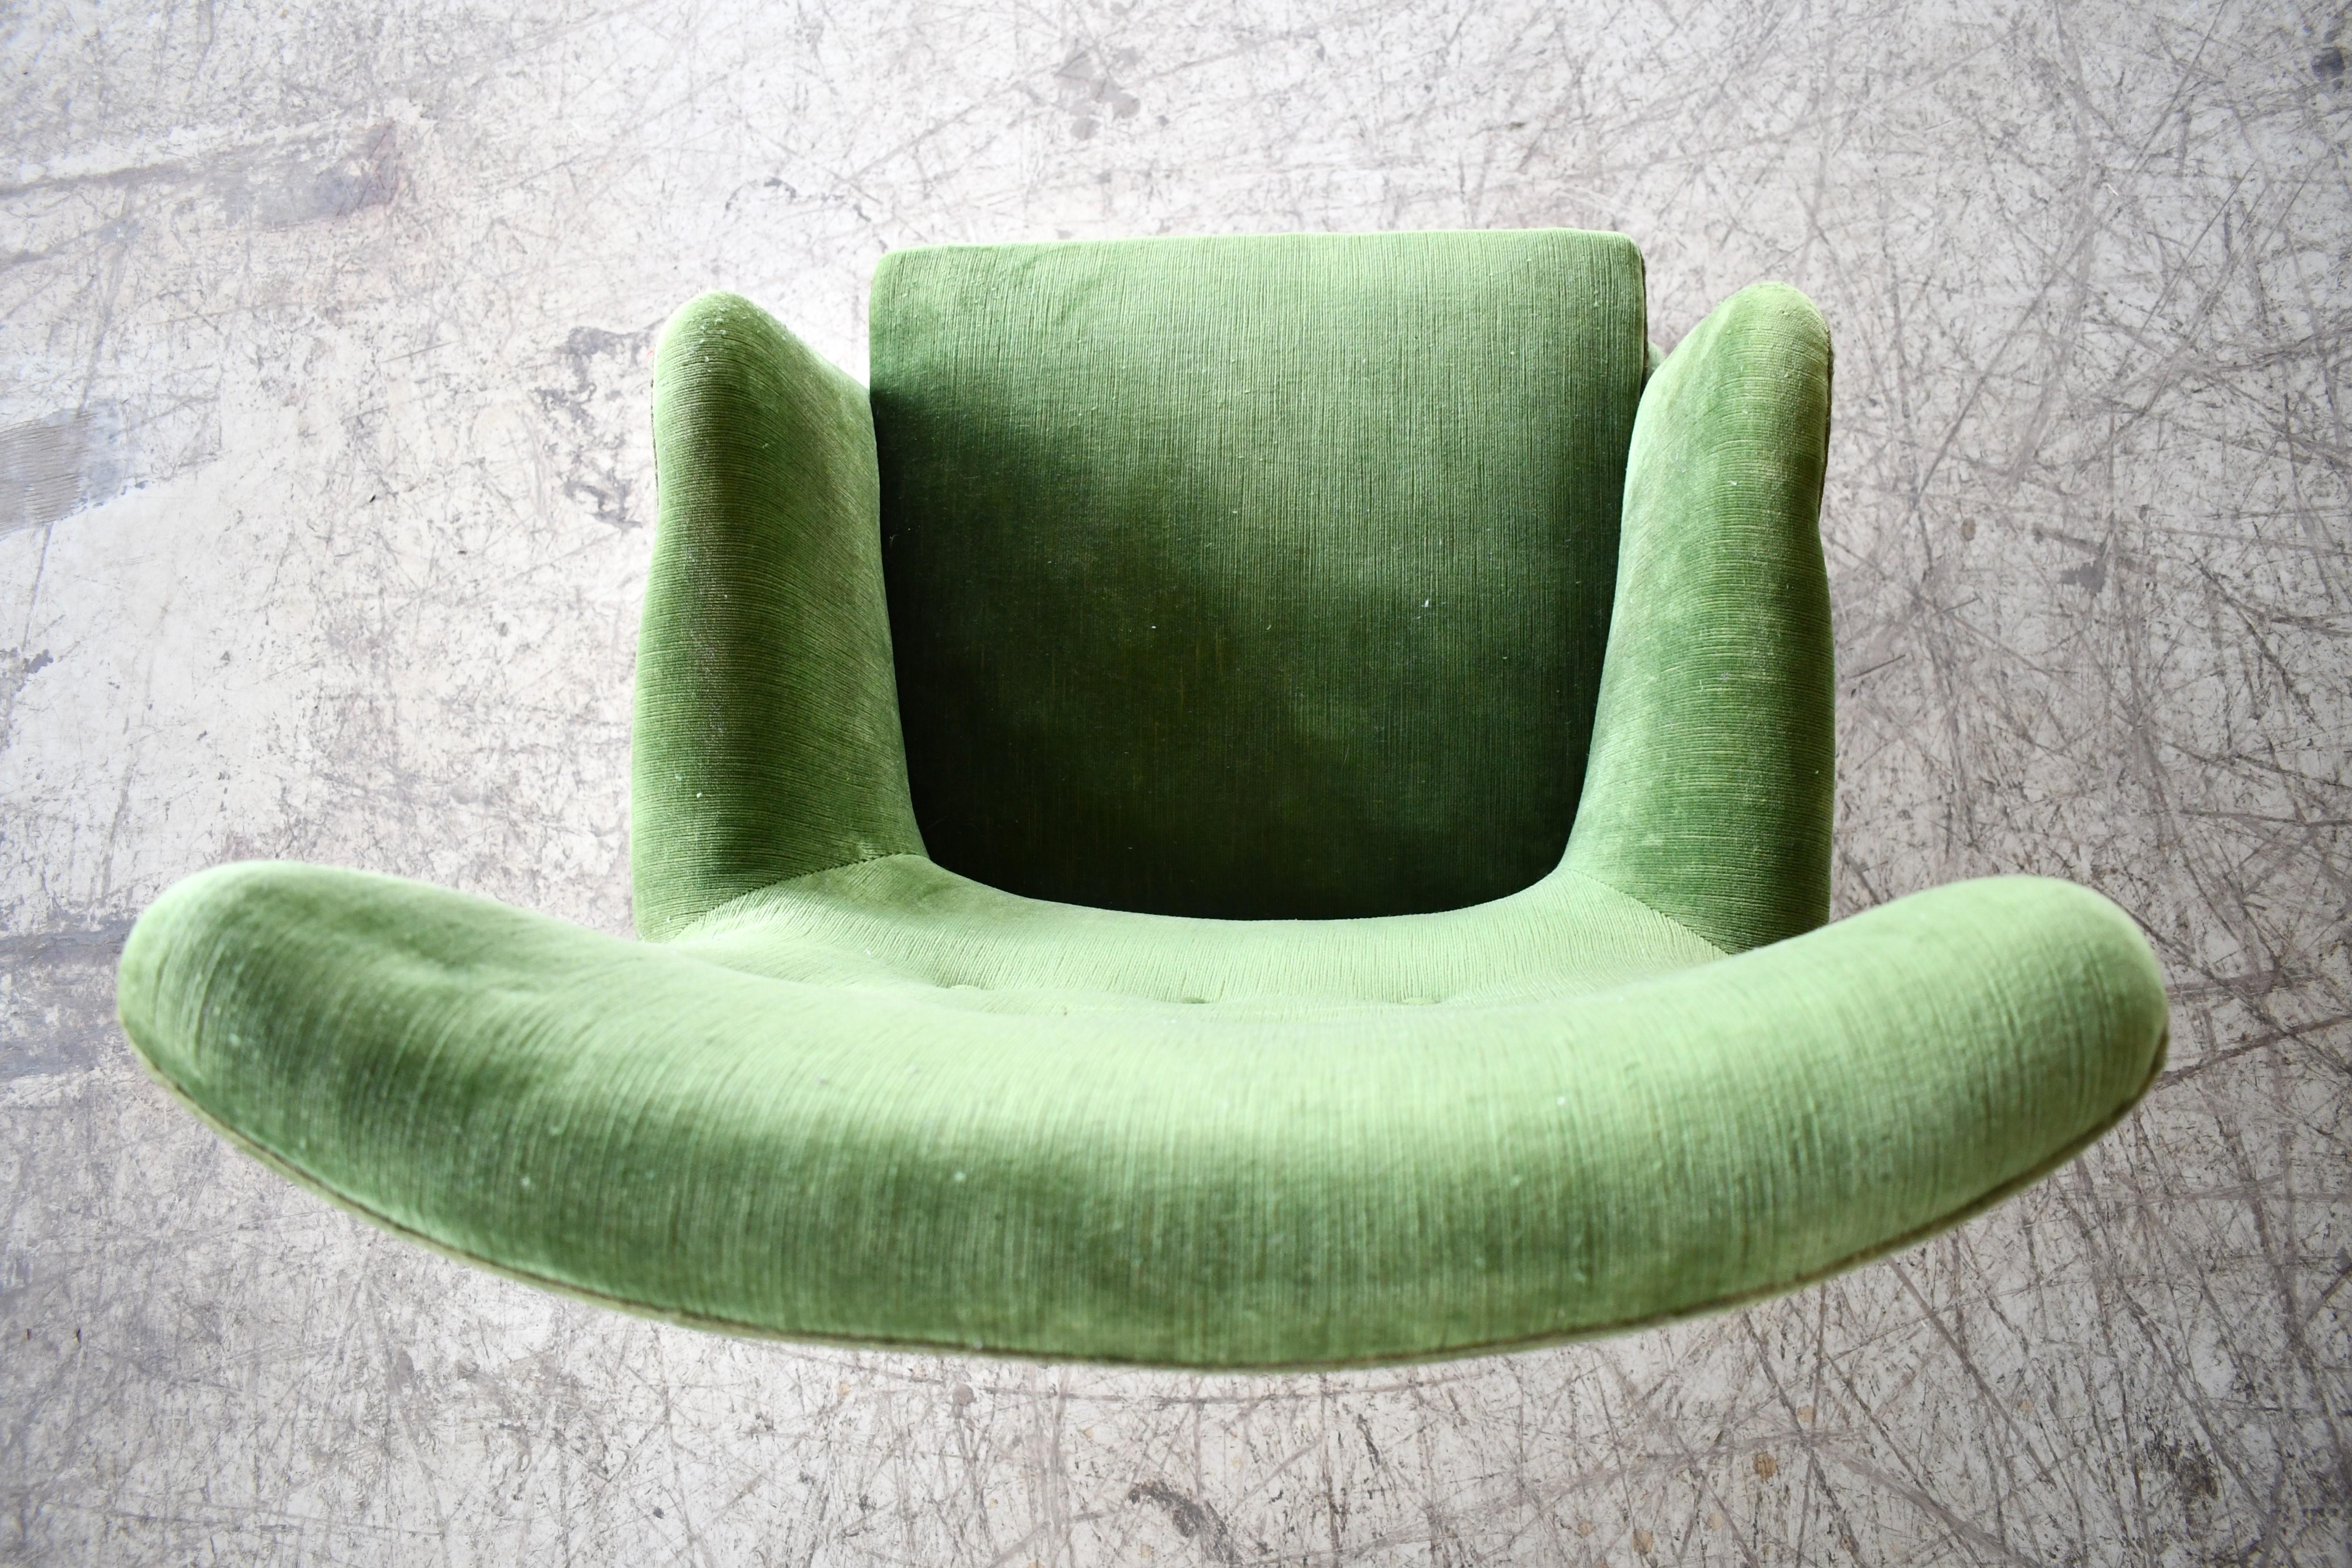 Peter Hvidt Orla Molgaard Classic Danish 1950s Lounge Chair For Sale 3